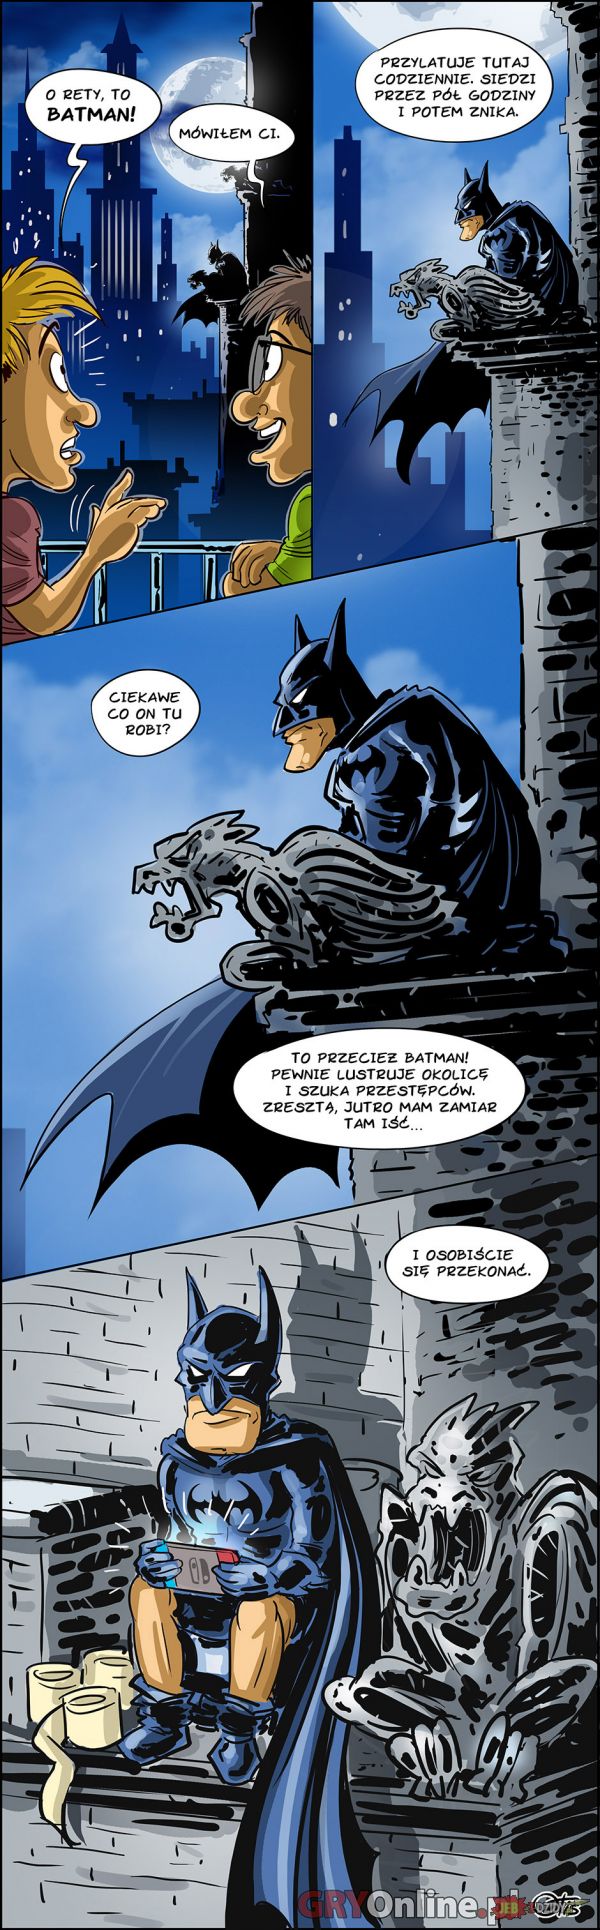 Co robi Batman?